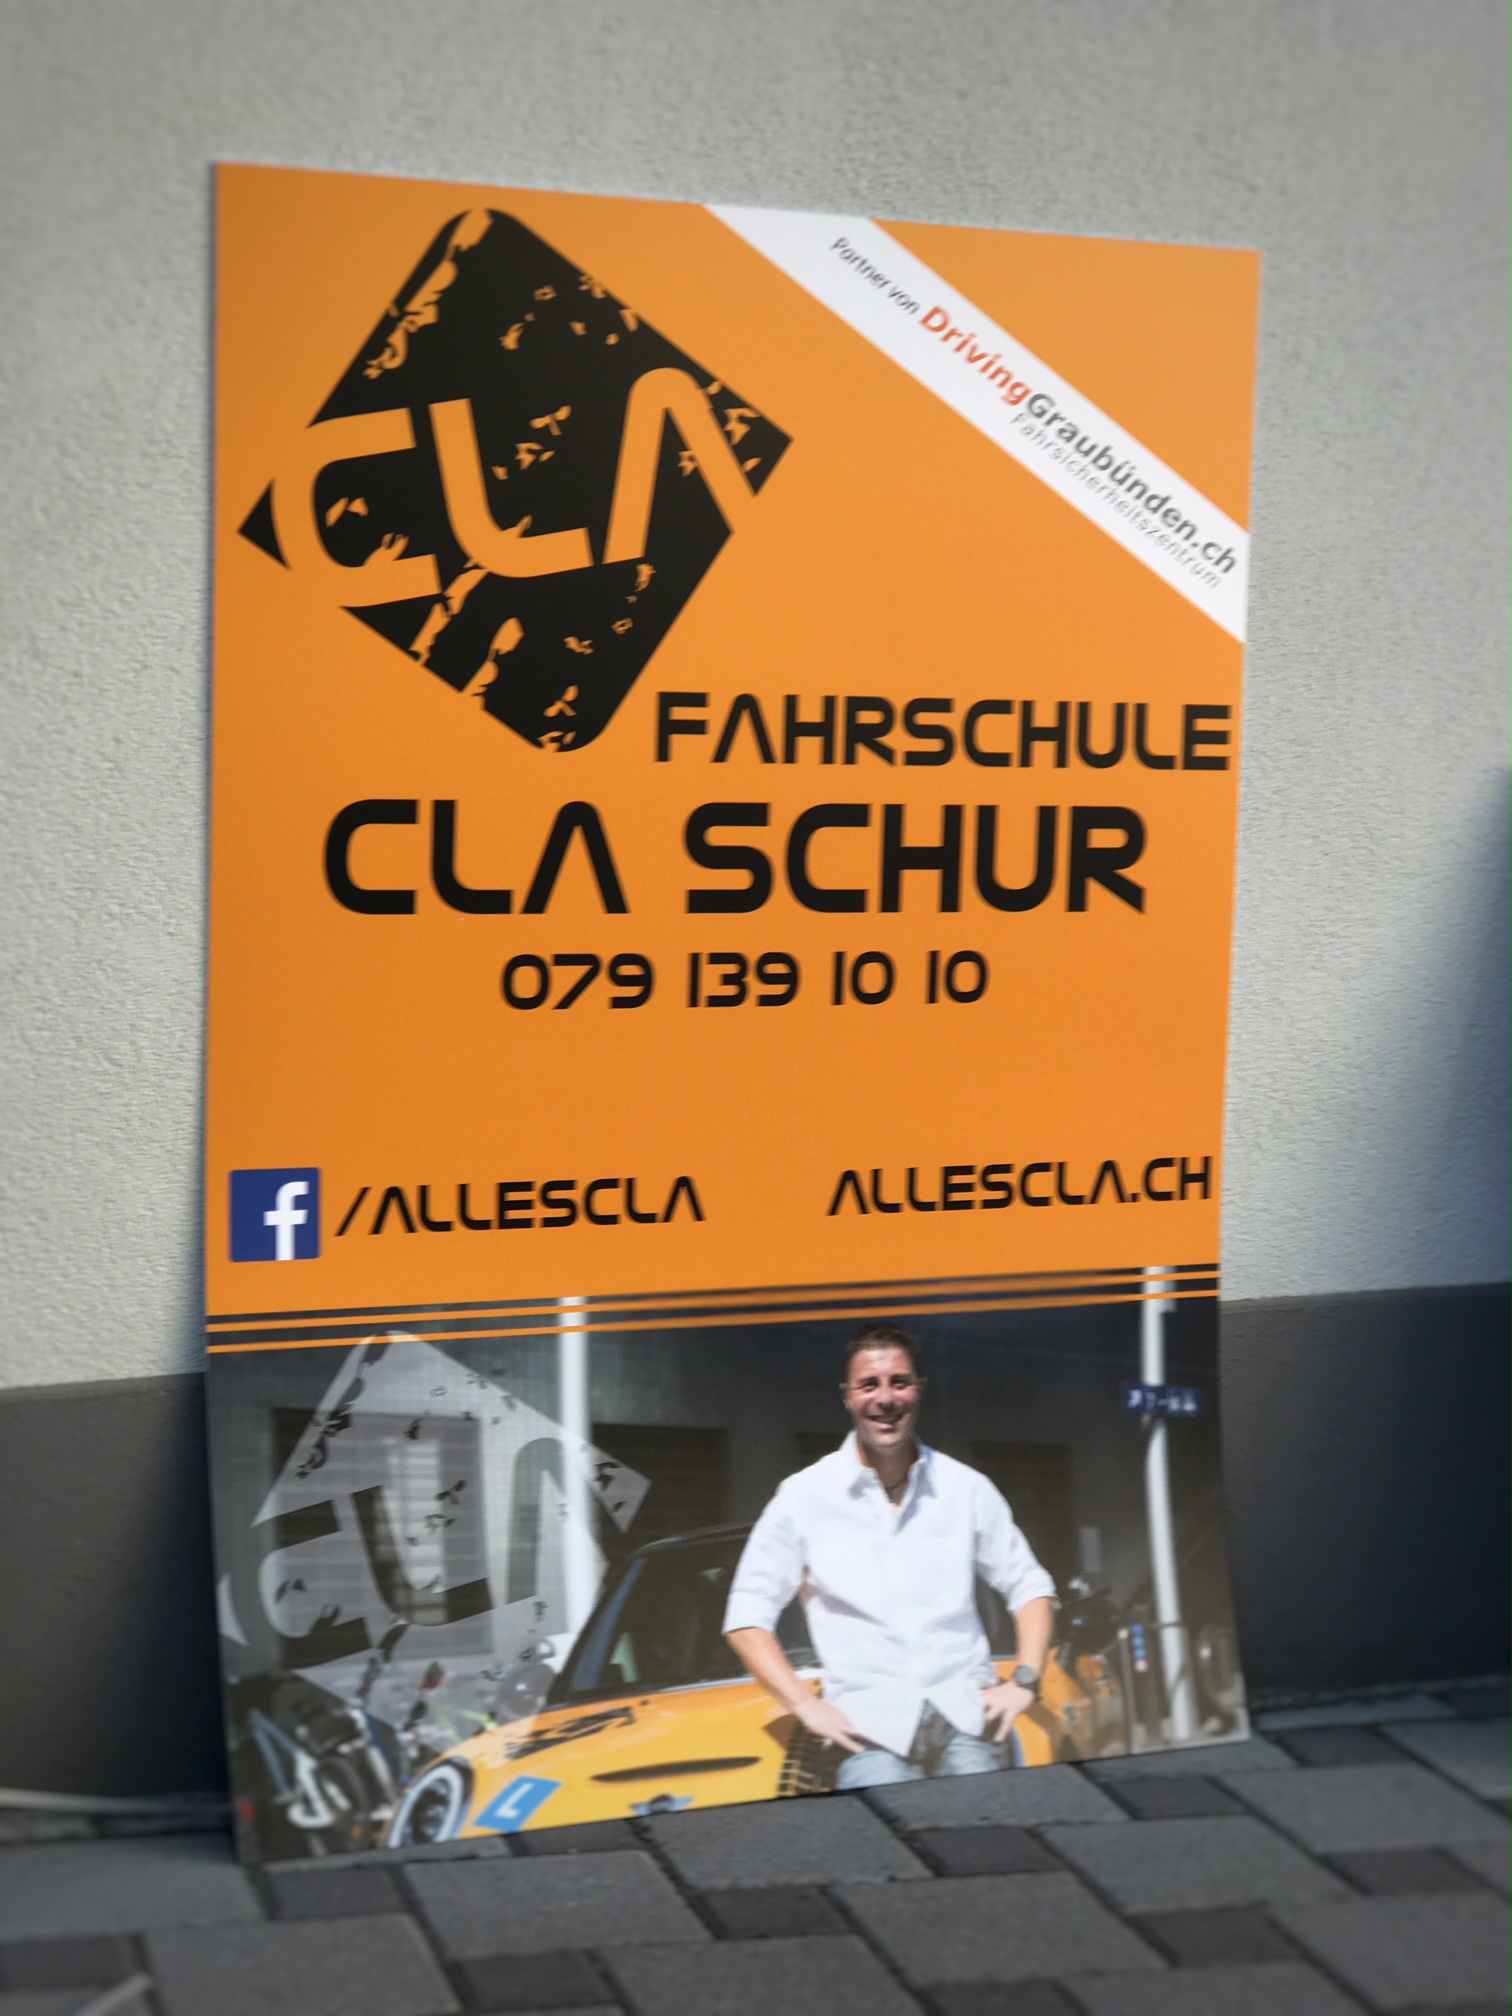 Cla Schur Fahrschule